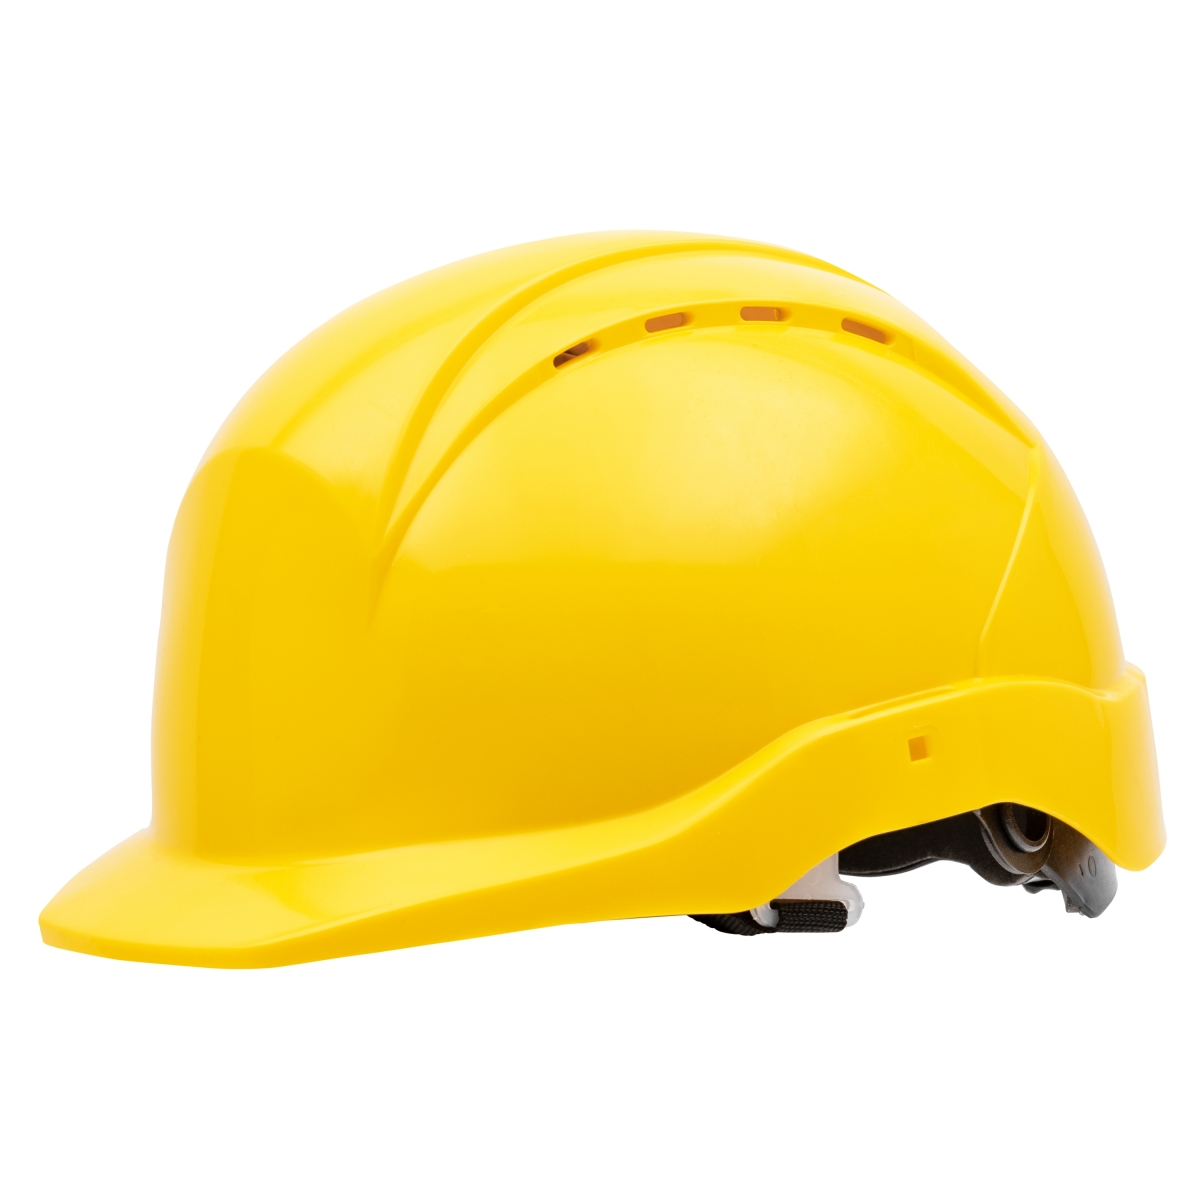 NITRAS-Industrieschutzhelm, HEAD PROTECT, Farbe: gelb